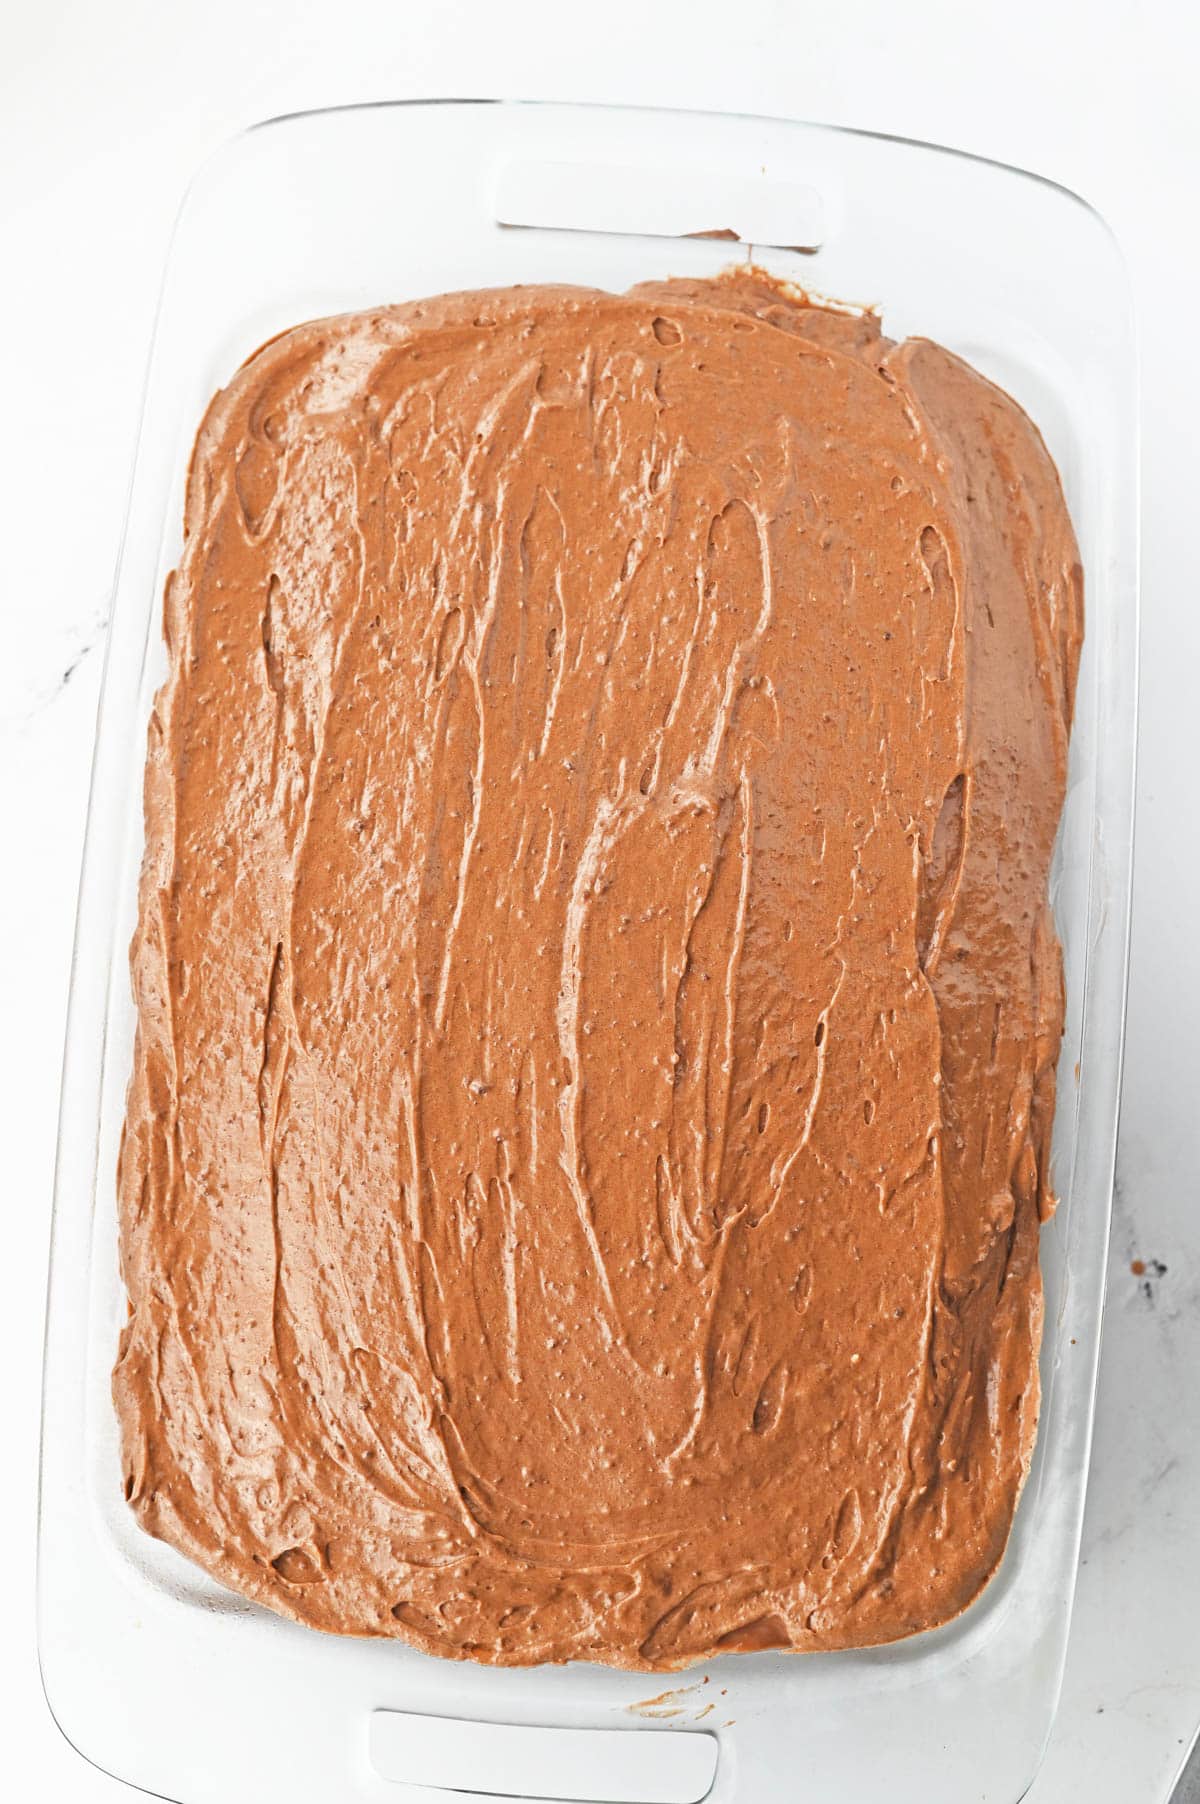 Chocolate poke cake with chocolate frosting